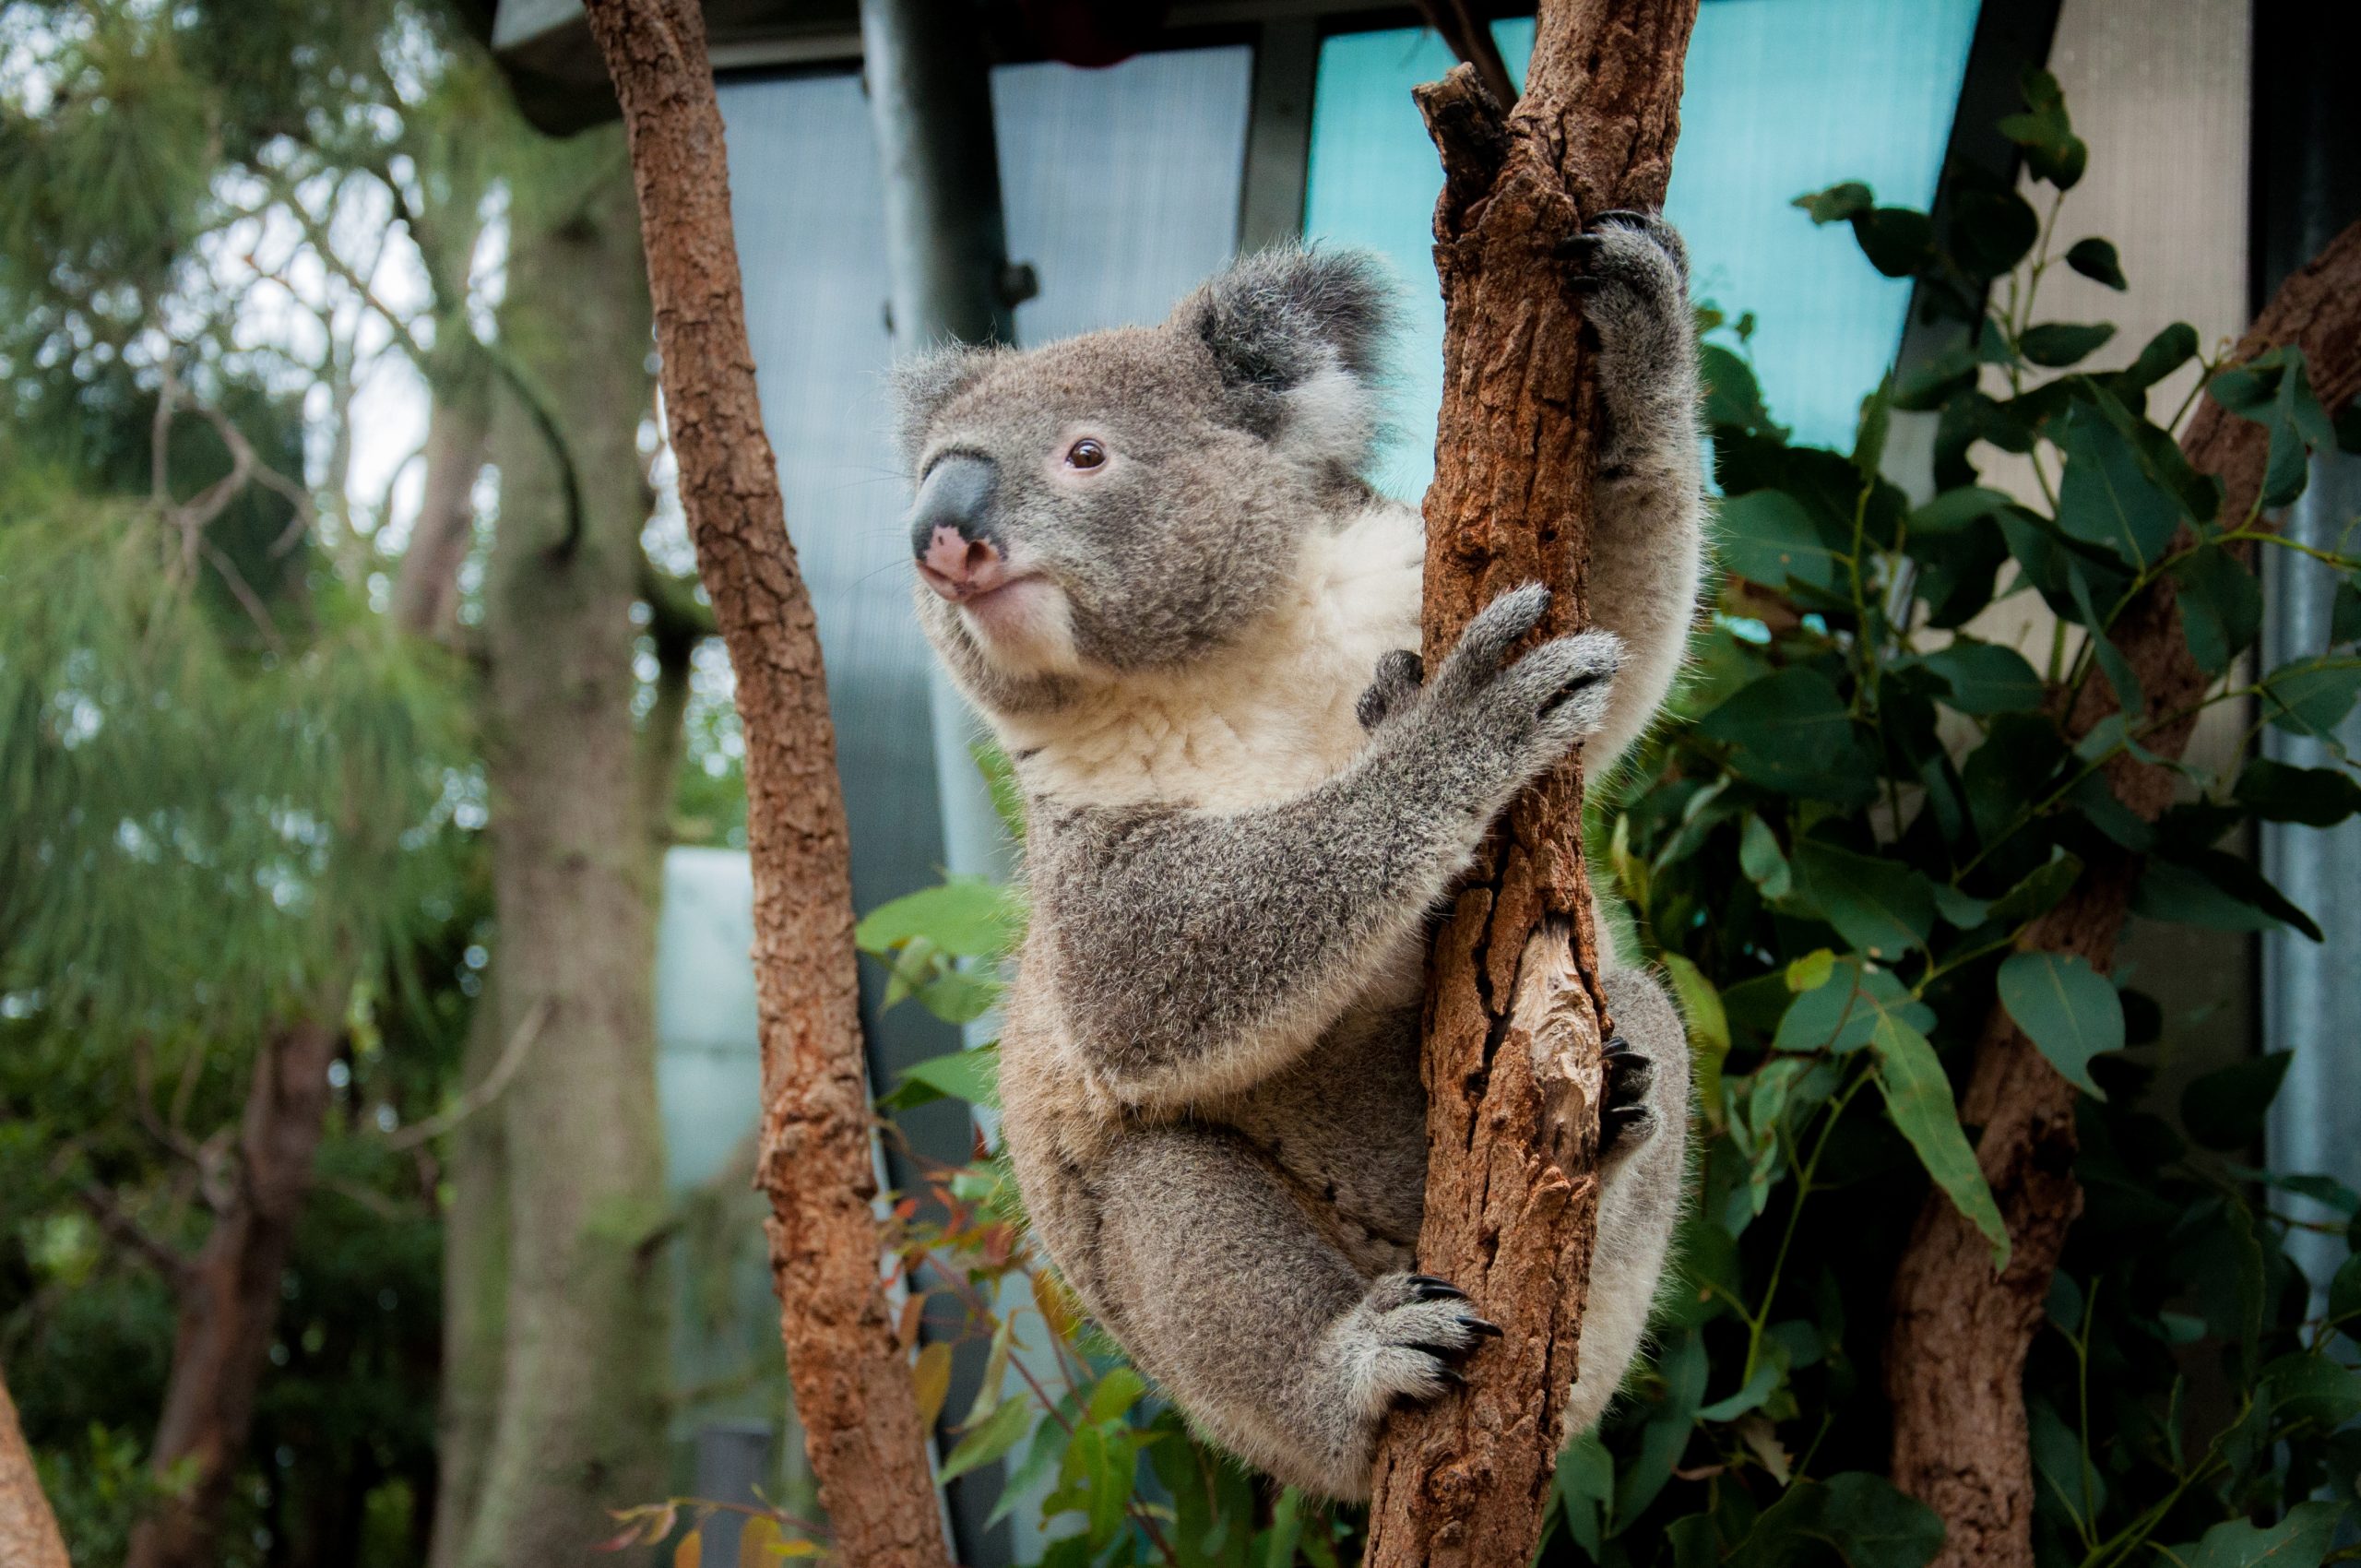 Australia has lost 30% of its koalas